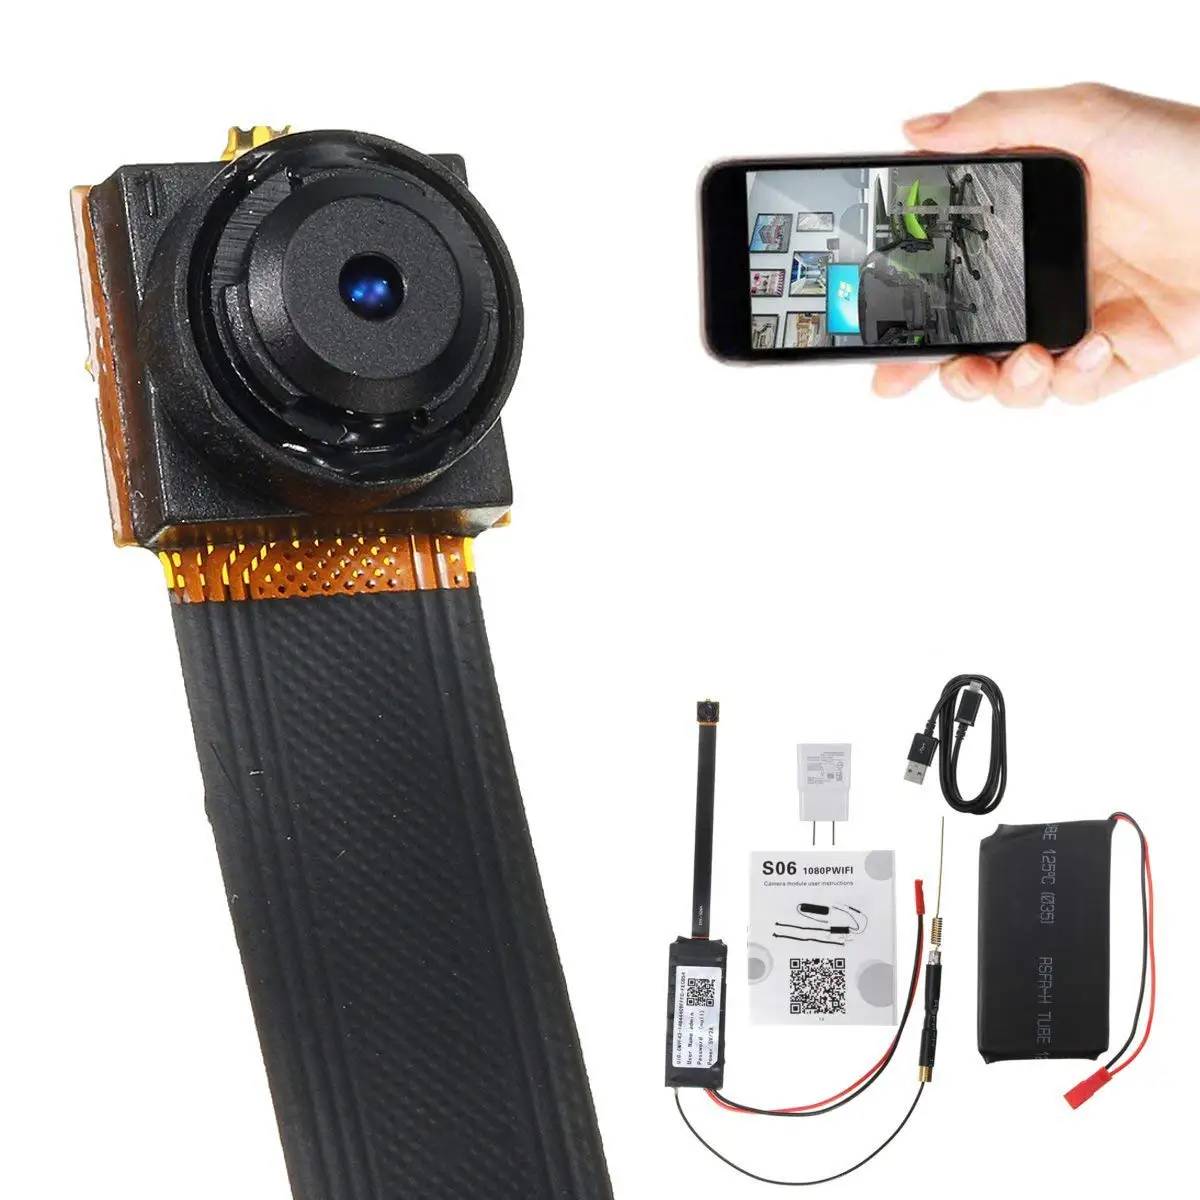 mini spy camera with audio and video recording